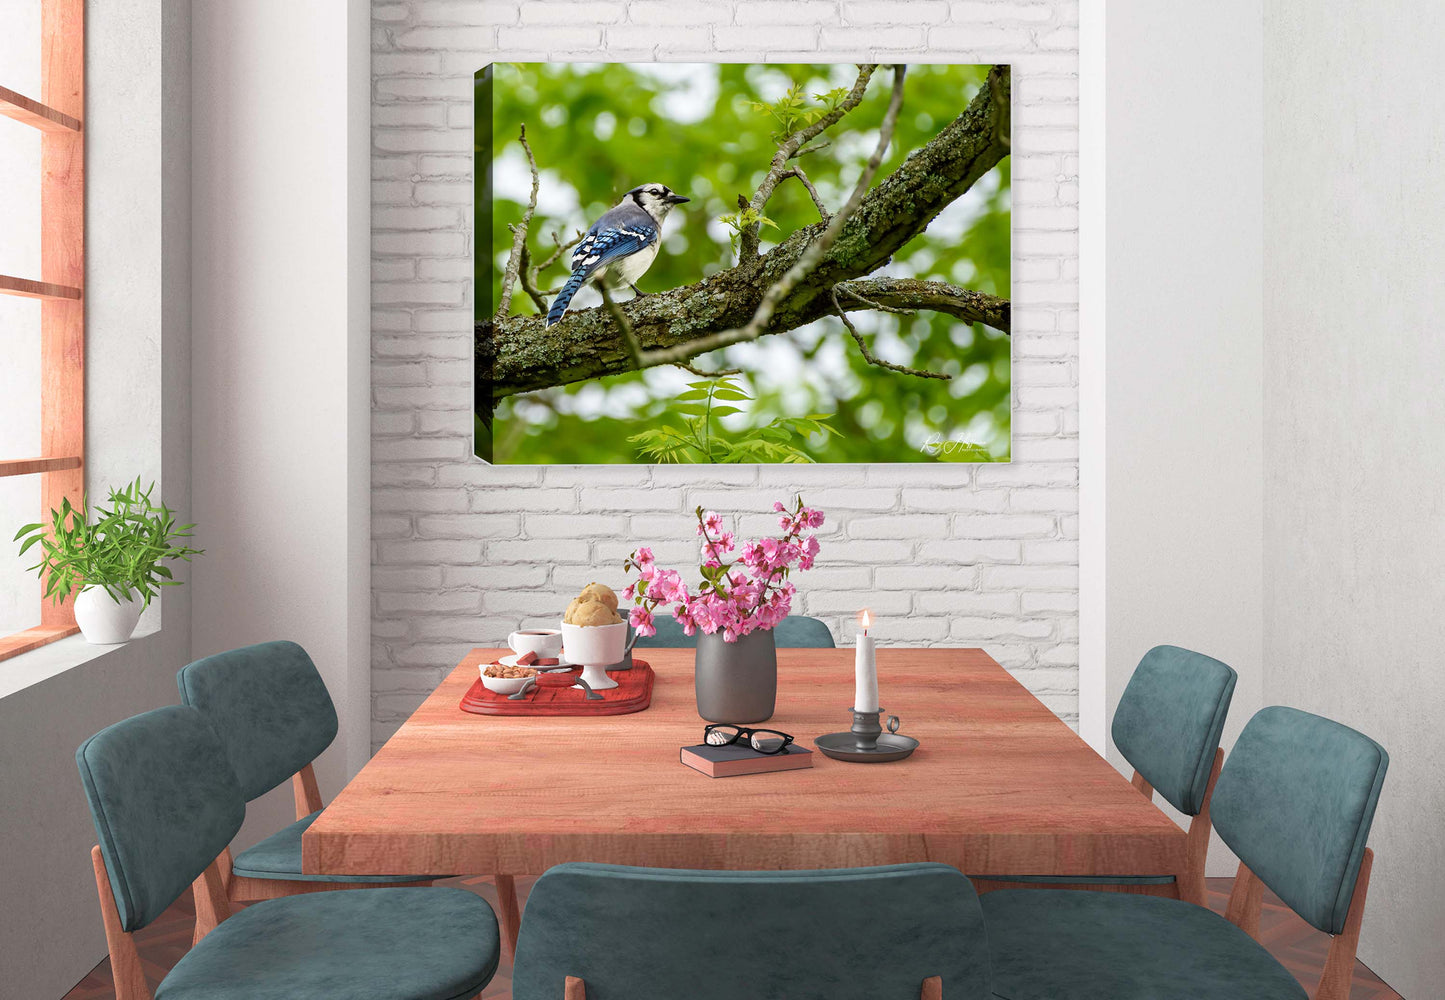 Blue Jay - Springtime Fine Art Photography